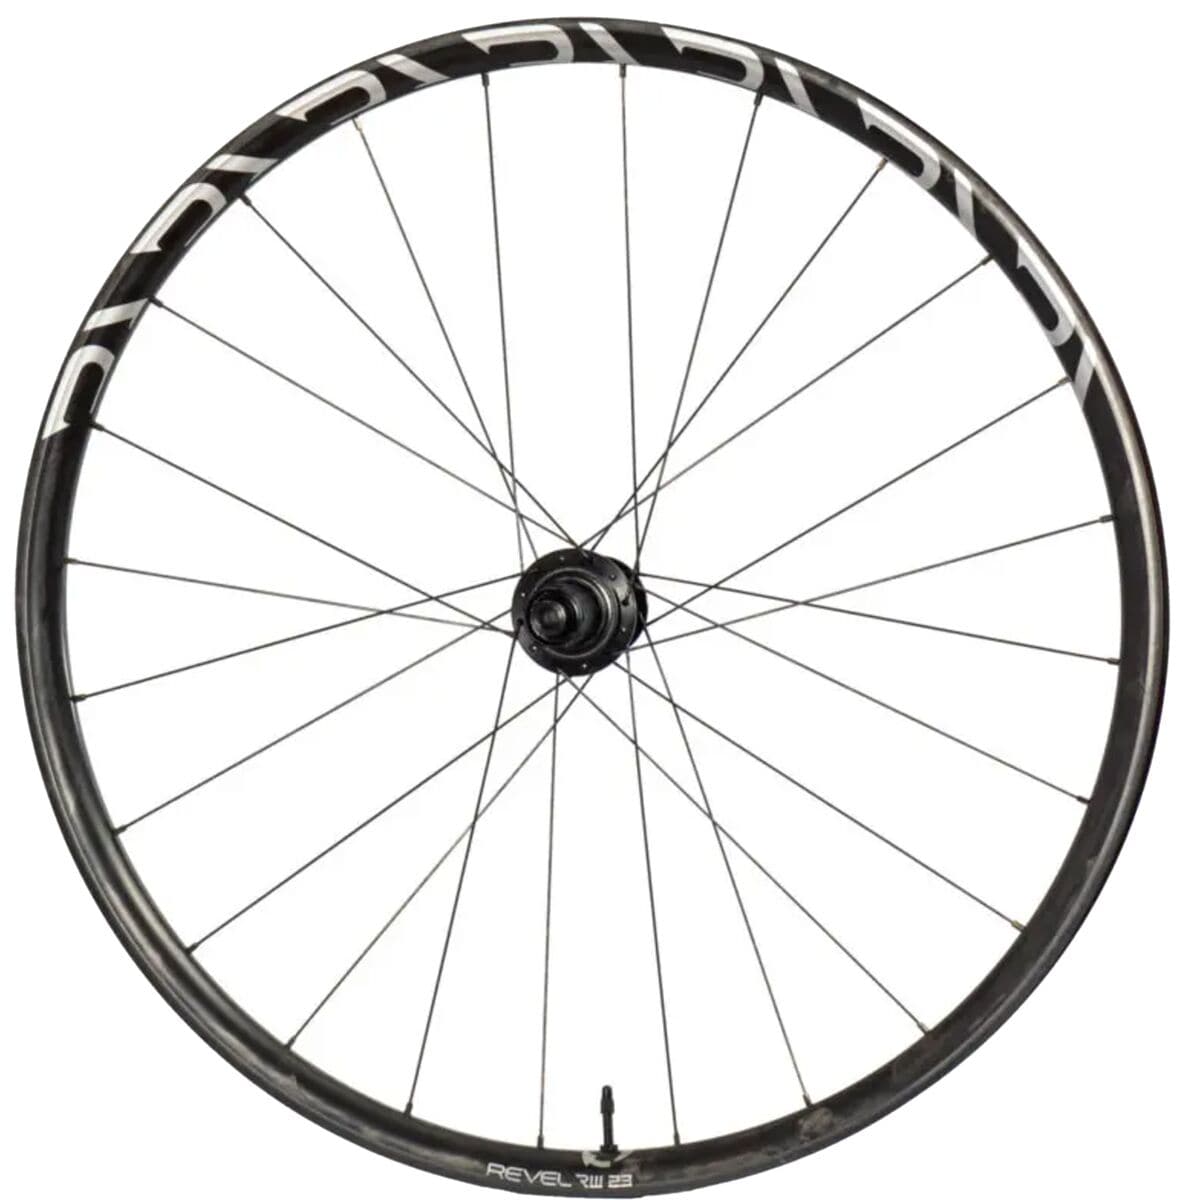 Revel Wheels RW23 1/1 Wheel